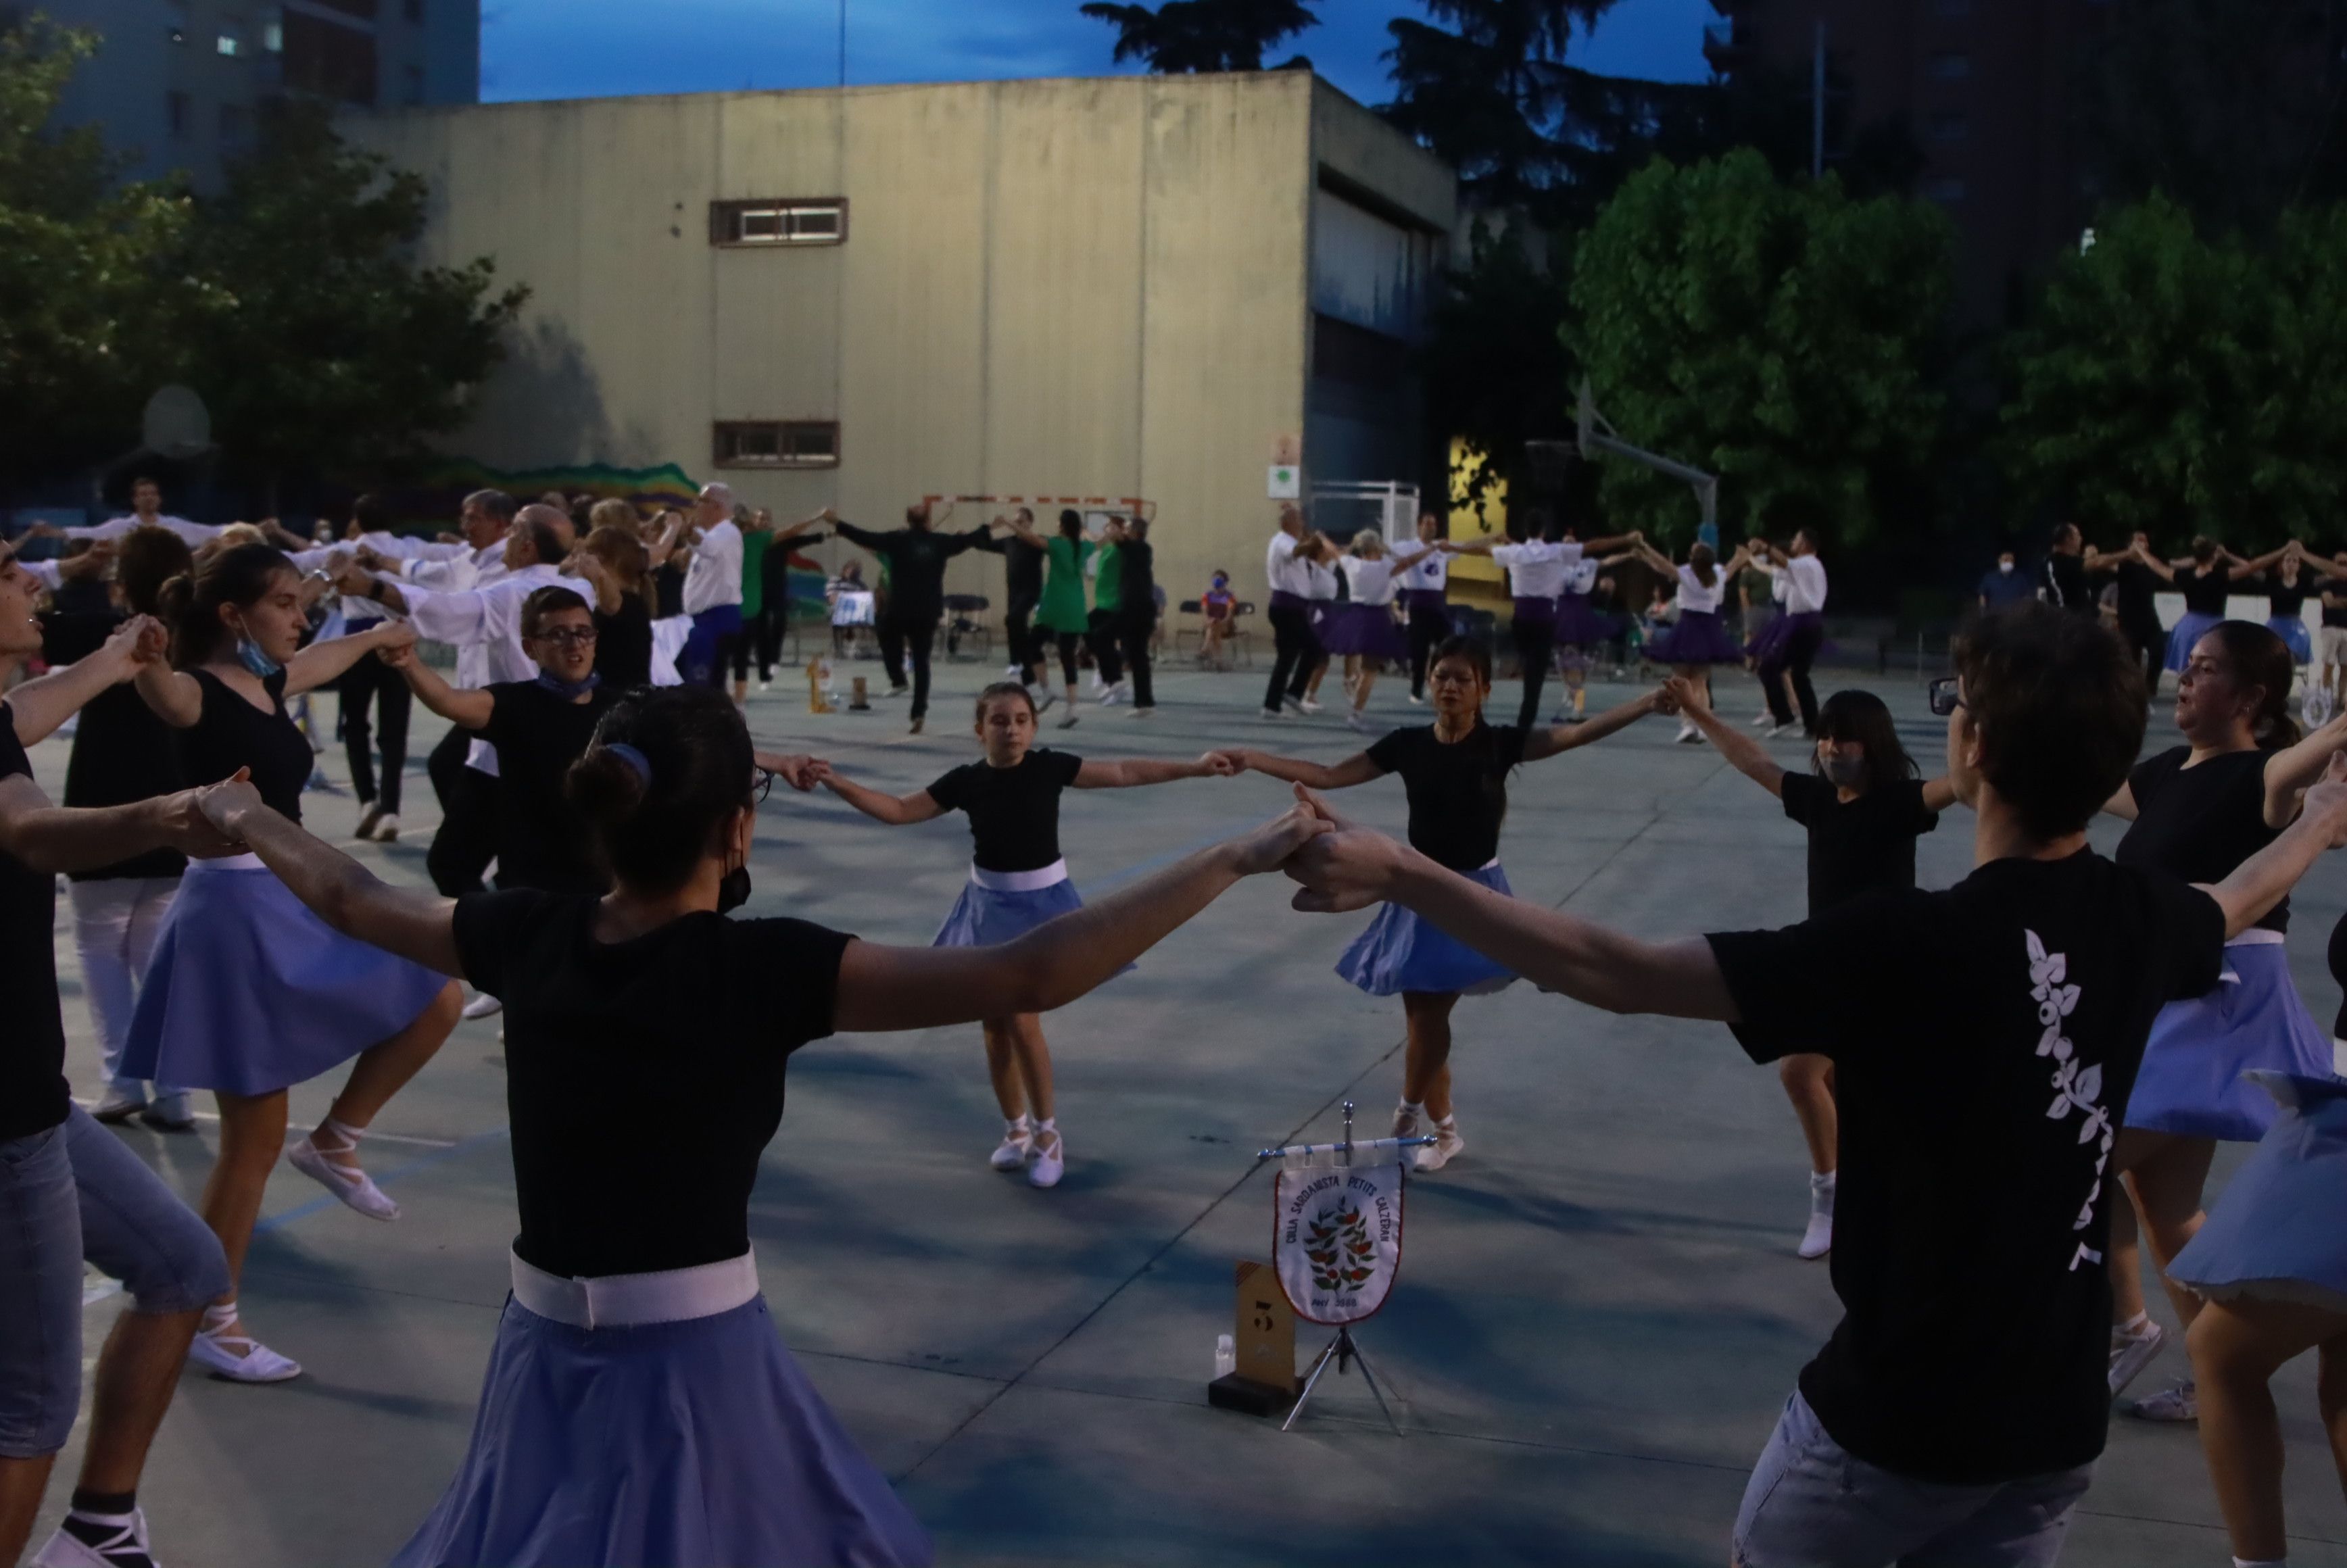 Concurs de colles sardanistes per Festa Major a Rubí. FOTO: Josep Llamas